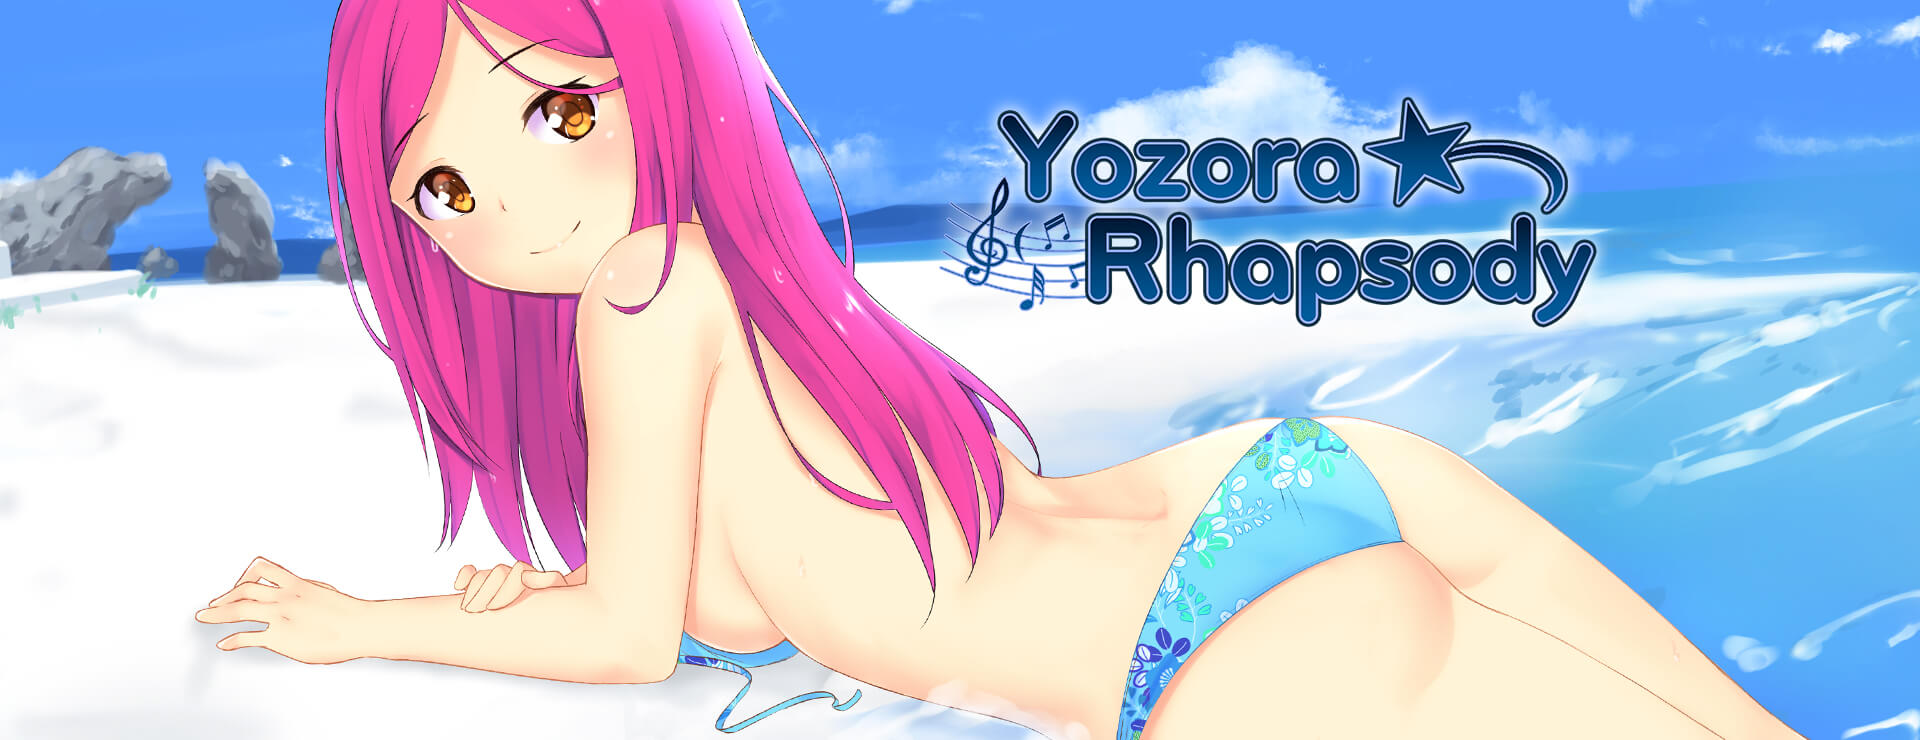 Yozora Rhapsody - Novela Visual Juego